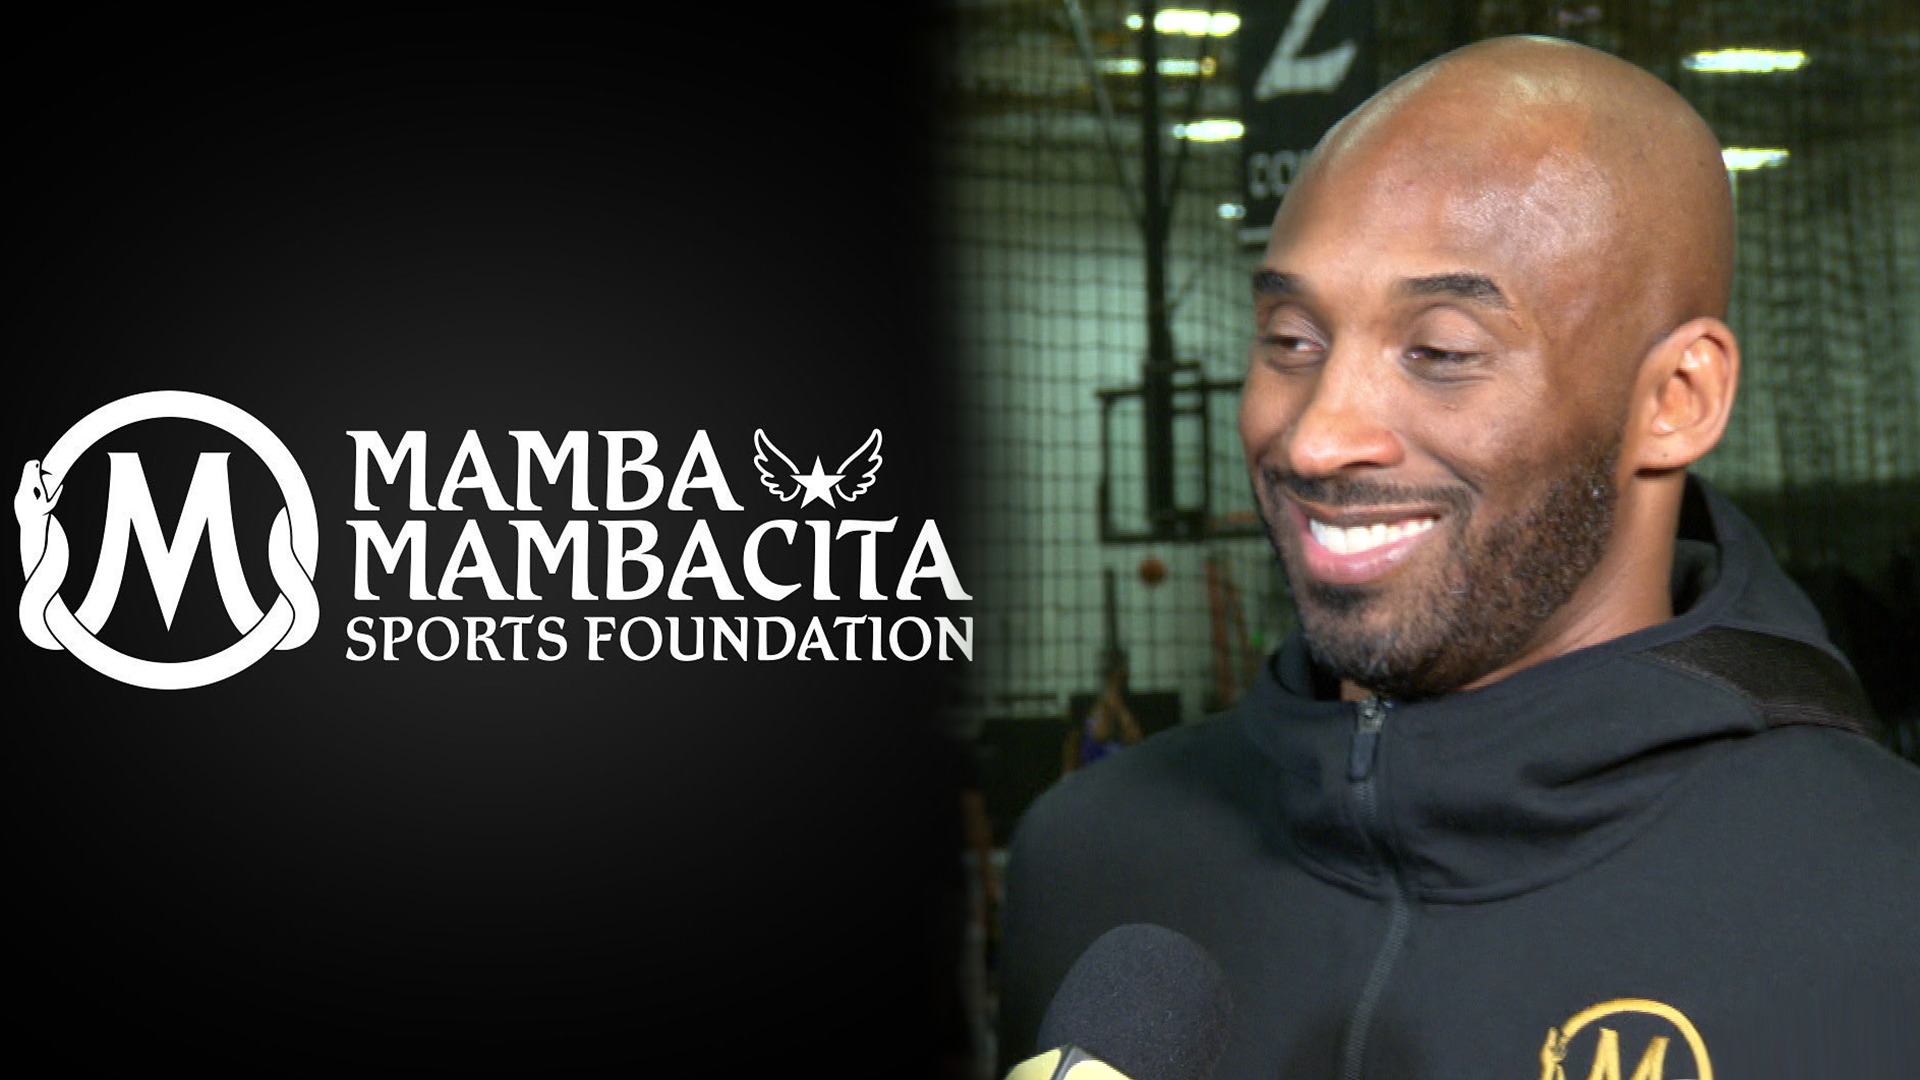 Mamba Sports Academy to Drop 'Mamba' from Name